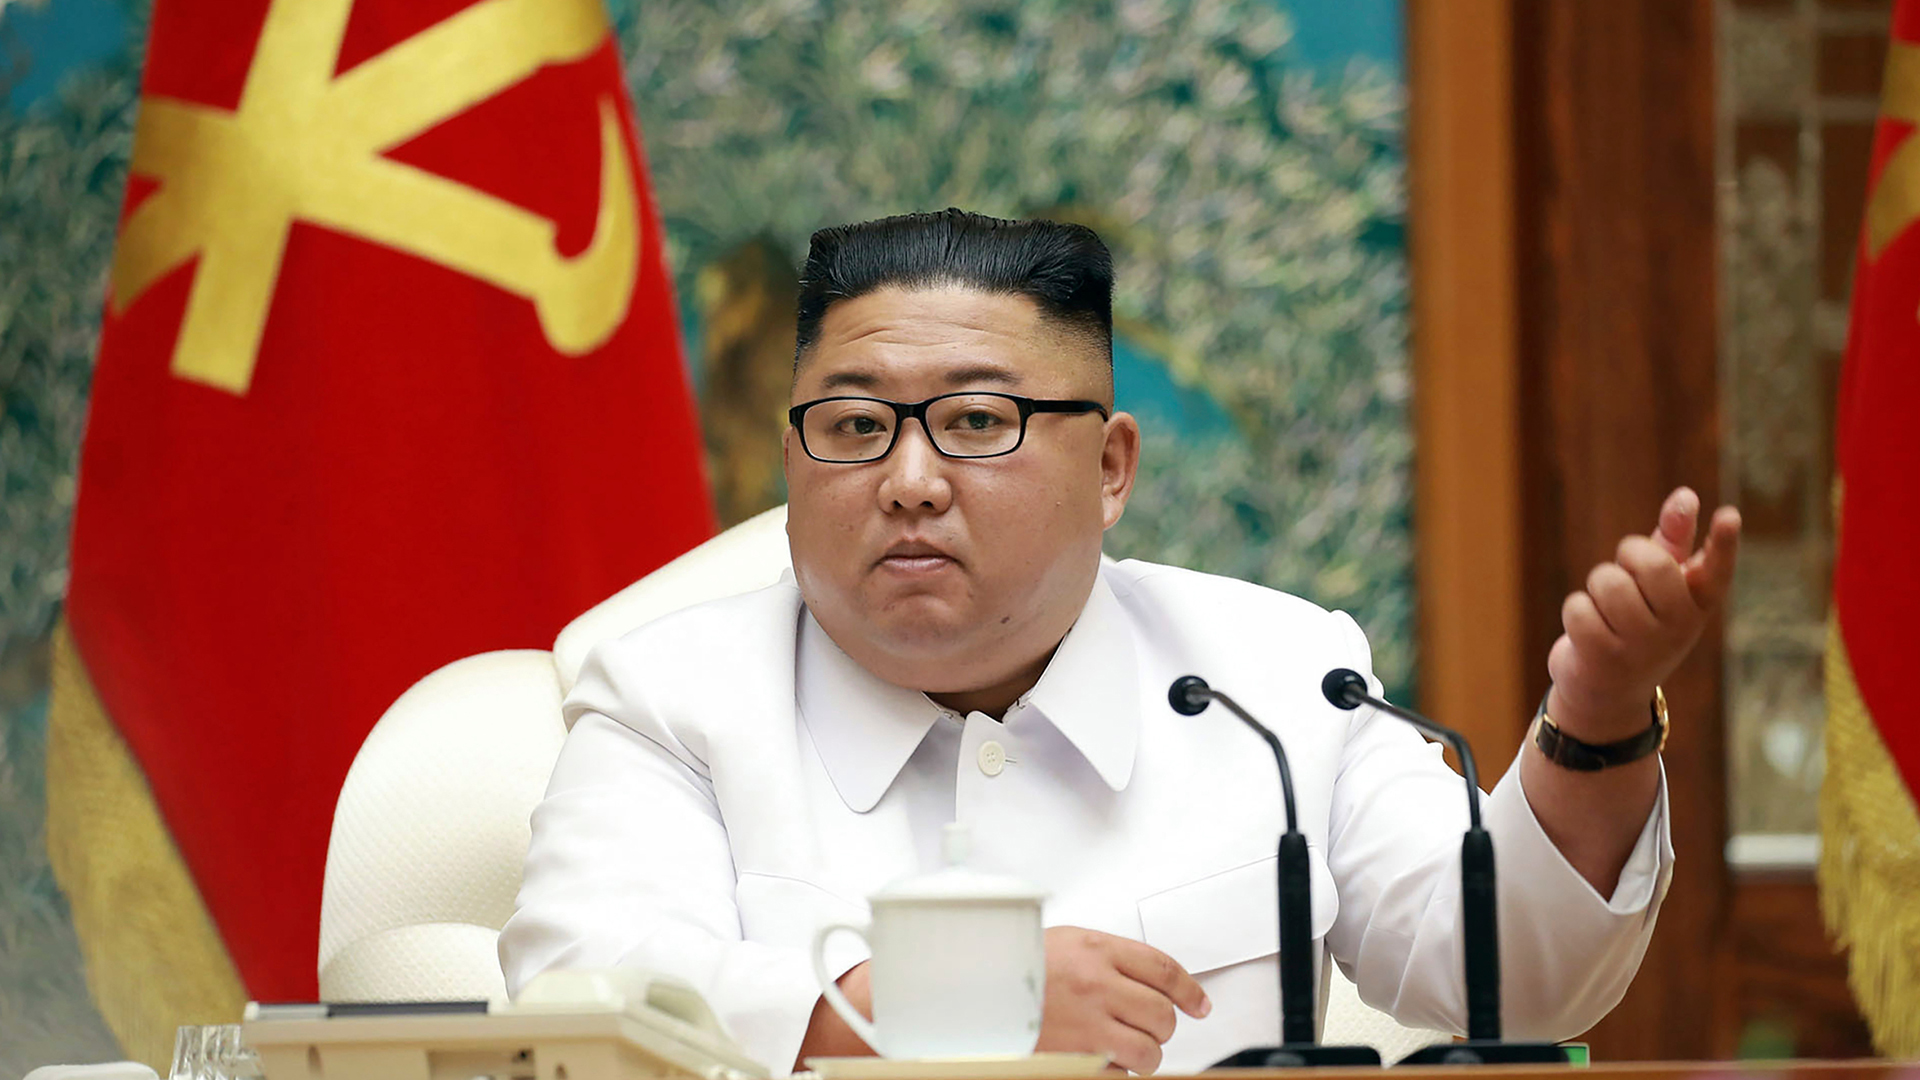 North Korea apologizes killing South Korean official